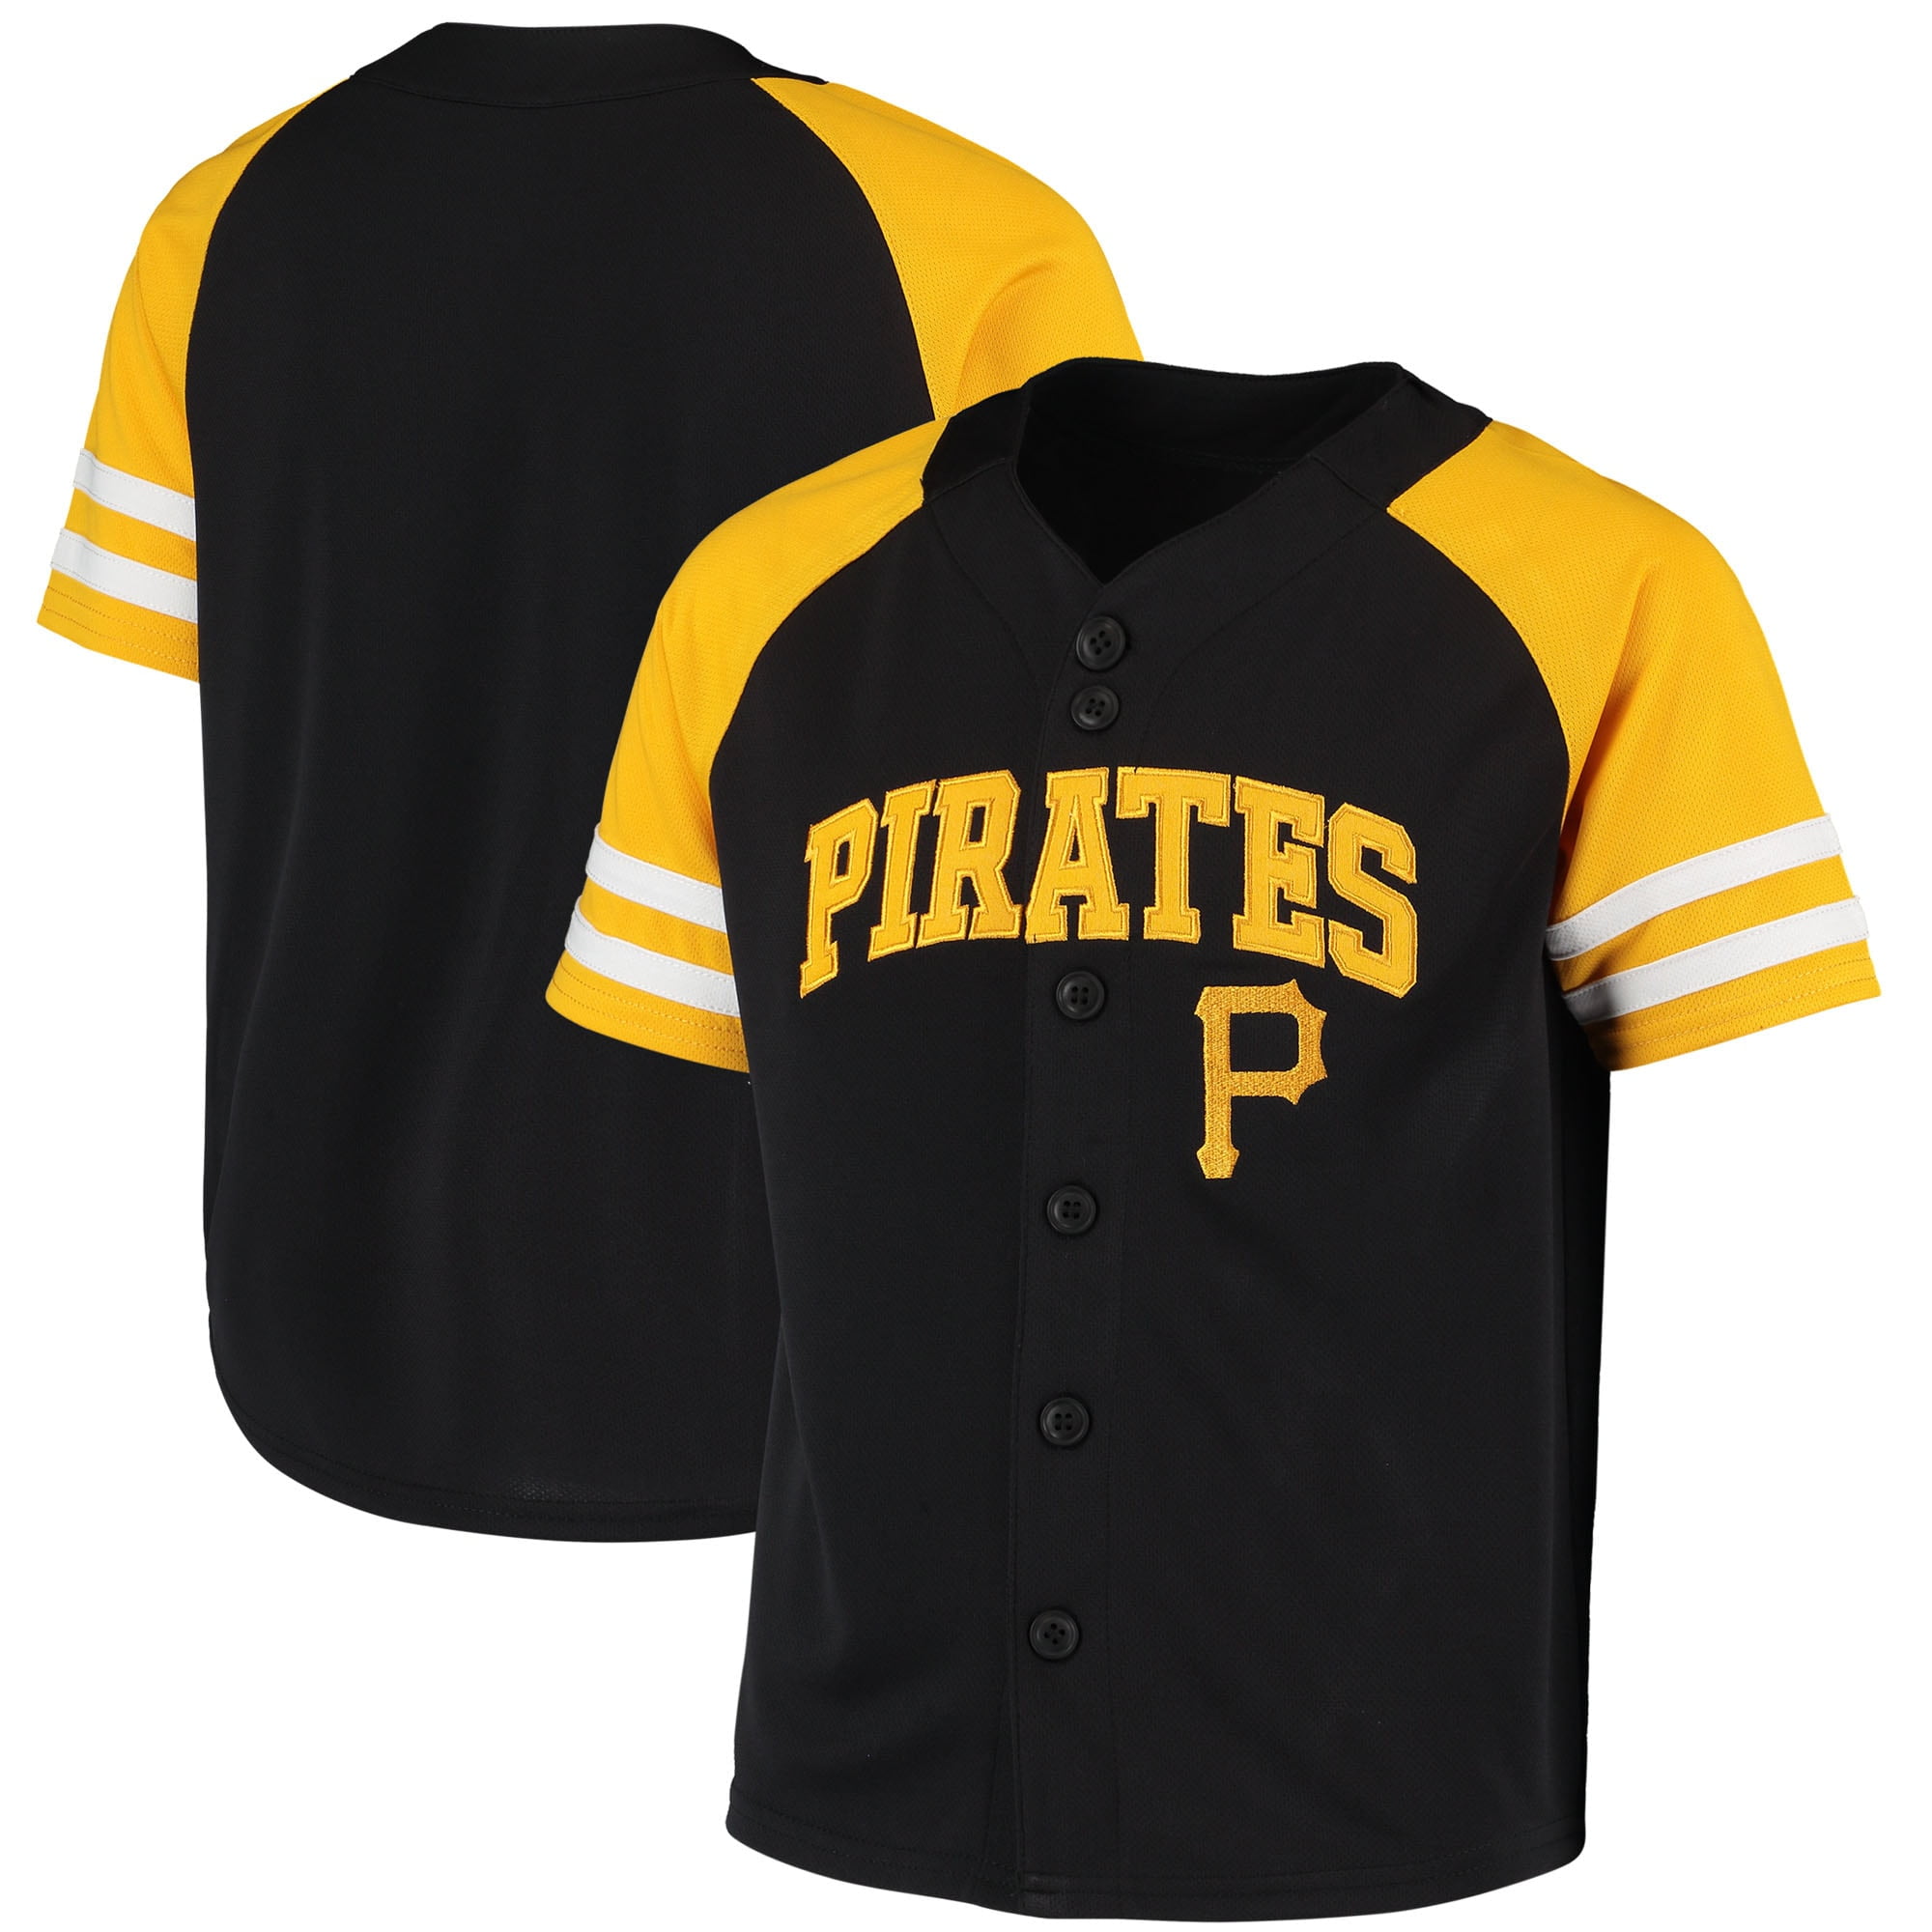 pittsburgh pirates gold jerseys